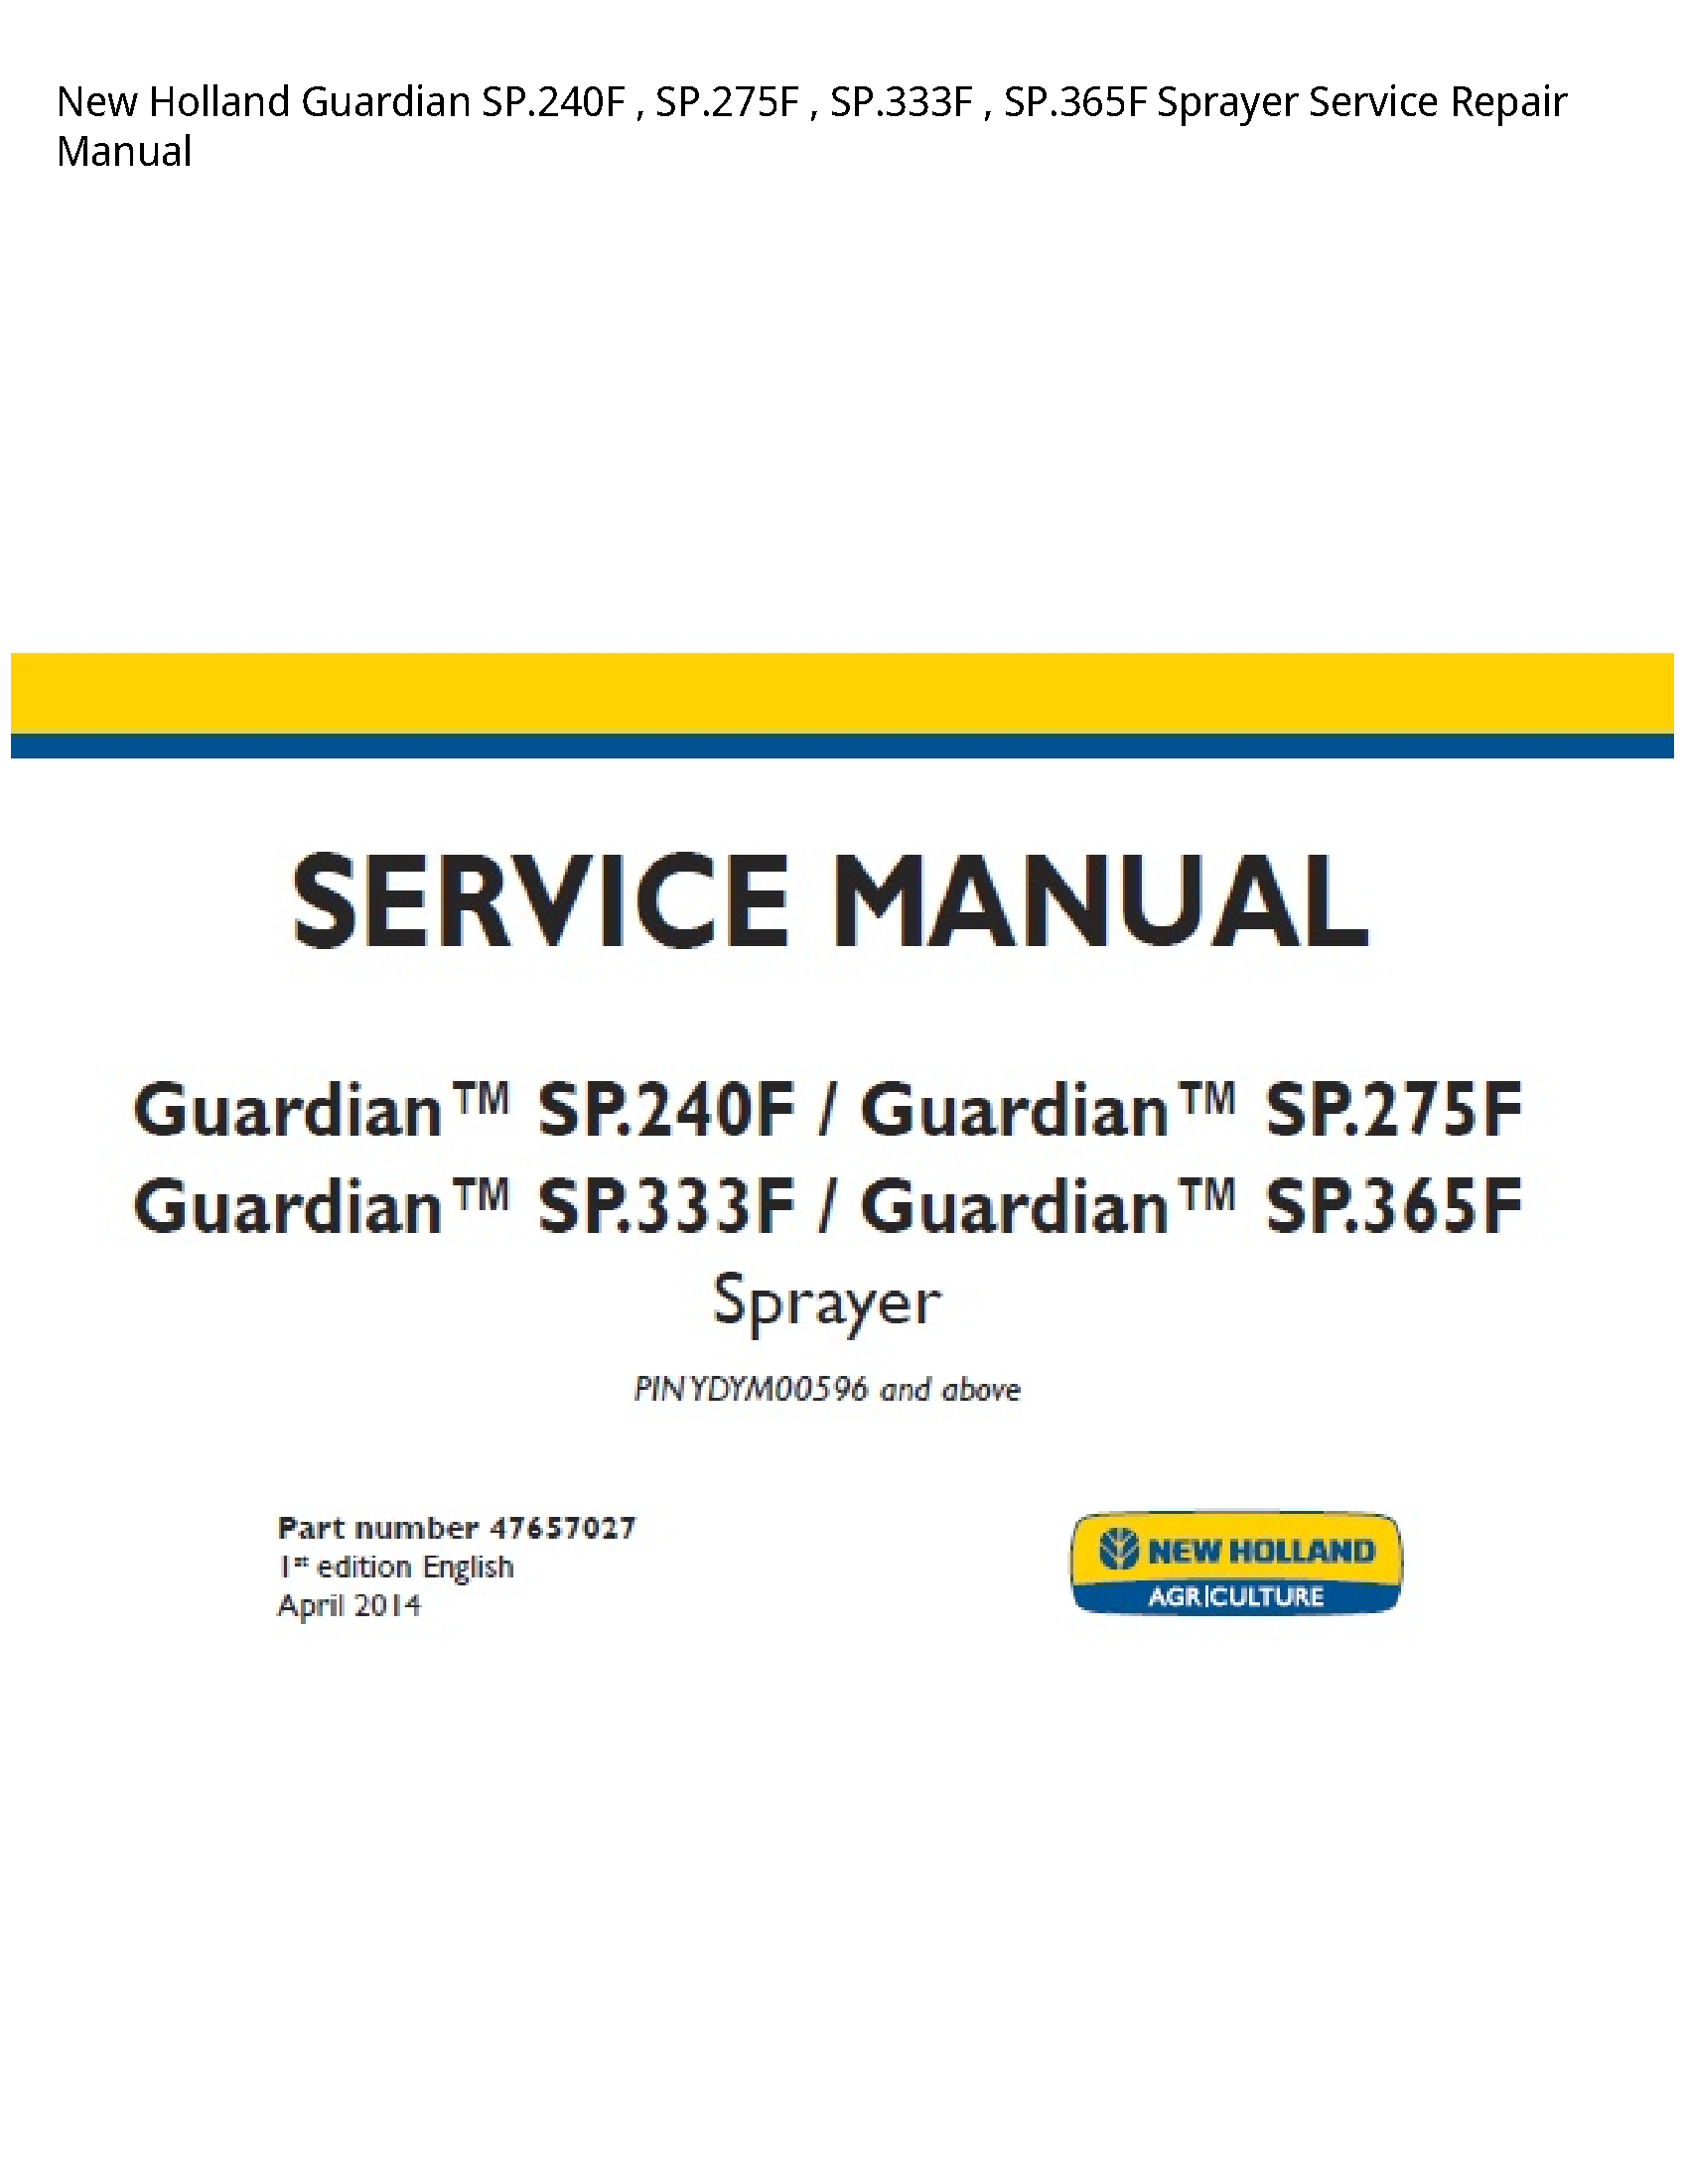 New Holland SP.240F Guardian Sprayer manual